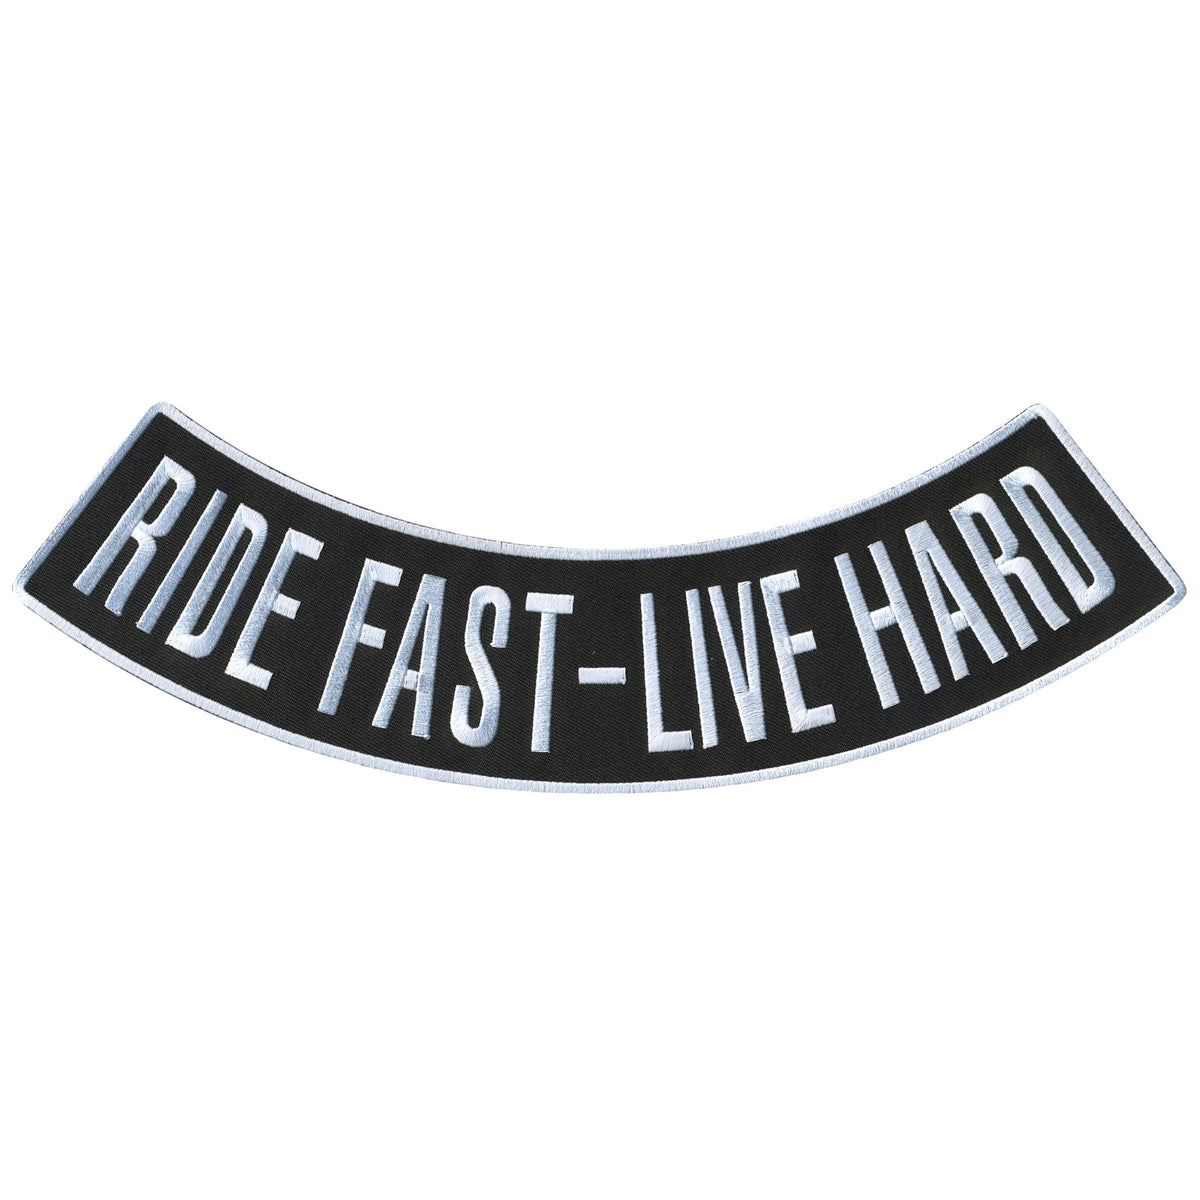 Hot Leathers Ride Fast - Live Hard 12” X 3” Bottom Rocker Patch